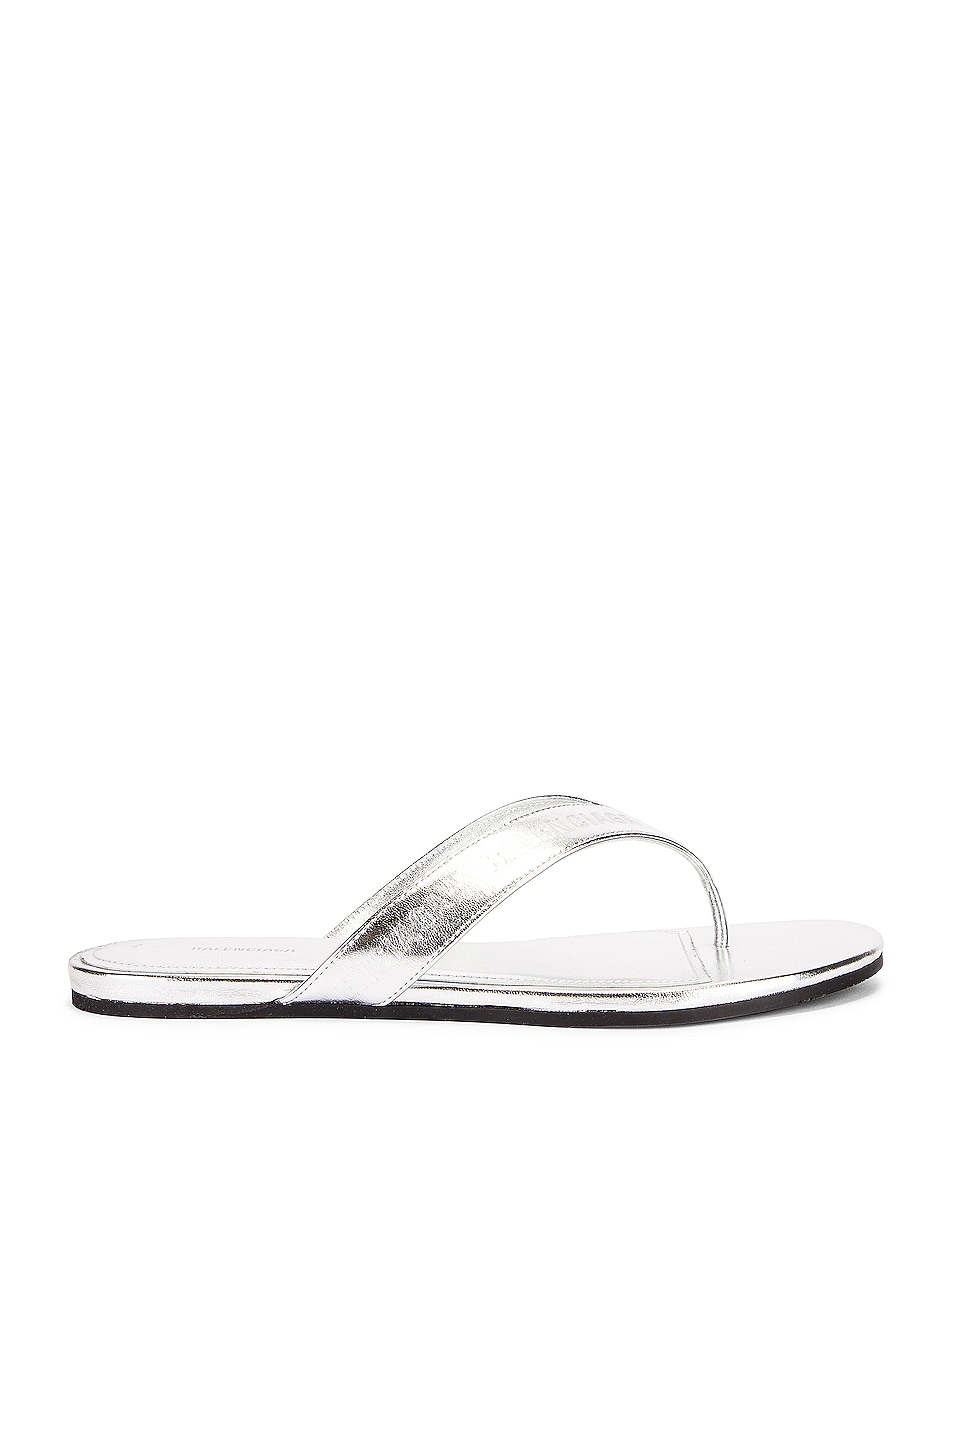 Balenciaga Round Flip Flop Sandals in Silver Metallic | FWRD